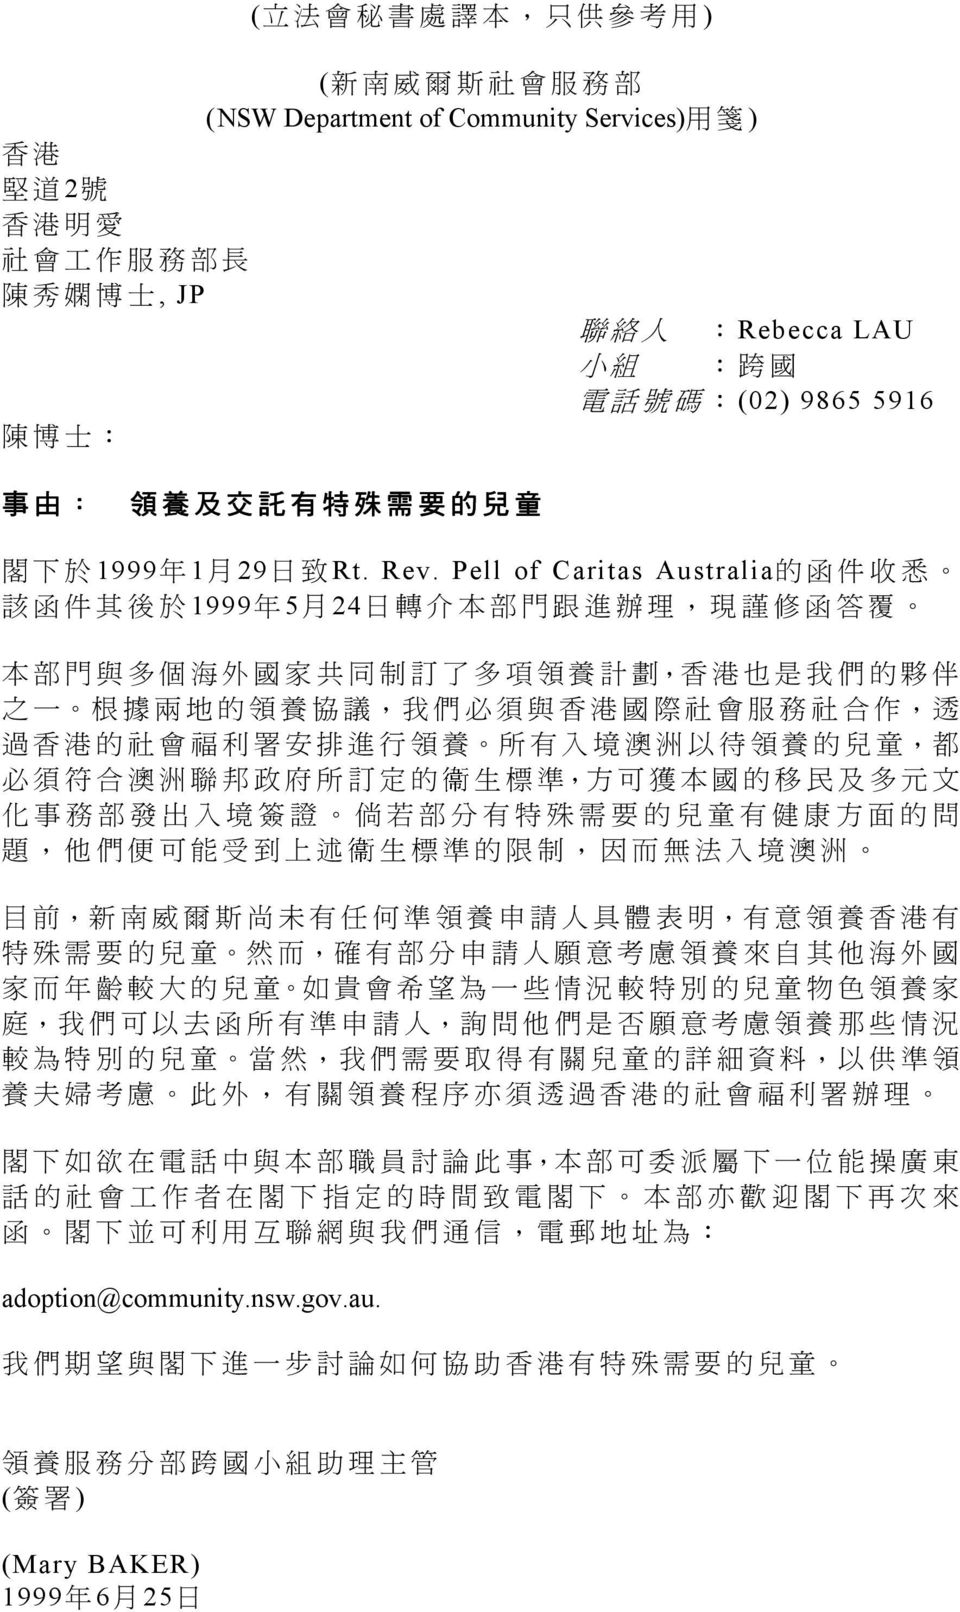 Pell of Caritas Australia 的 函 件 收 悉 該 函 件 其 後 於 1999 年 5 月 24 日 轉 介 本 部 門 跟 進 辦 理, 現 謹 修 函 答 覆 本 部 門 與 多 個 海 外 國 家 共 同 制 訂 了 多 項 領 養 計 劃, 香 港 也 是 我 們 的 夥 伴 之 一 根 據 兩 地 的 領 養 協 議, 我 們 必 須 與 香 港 國 際 社